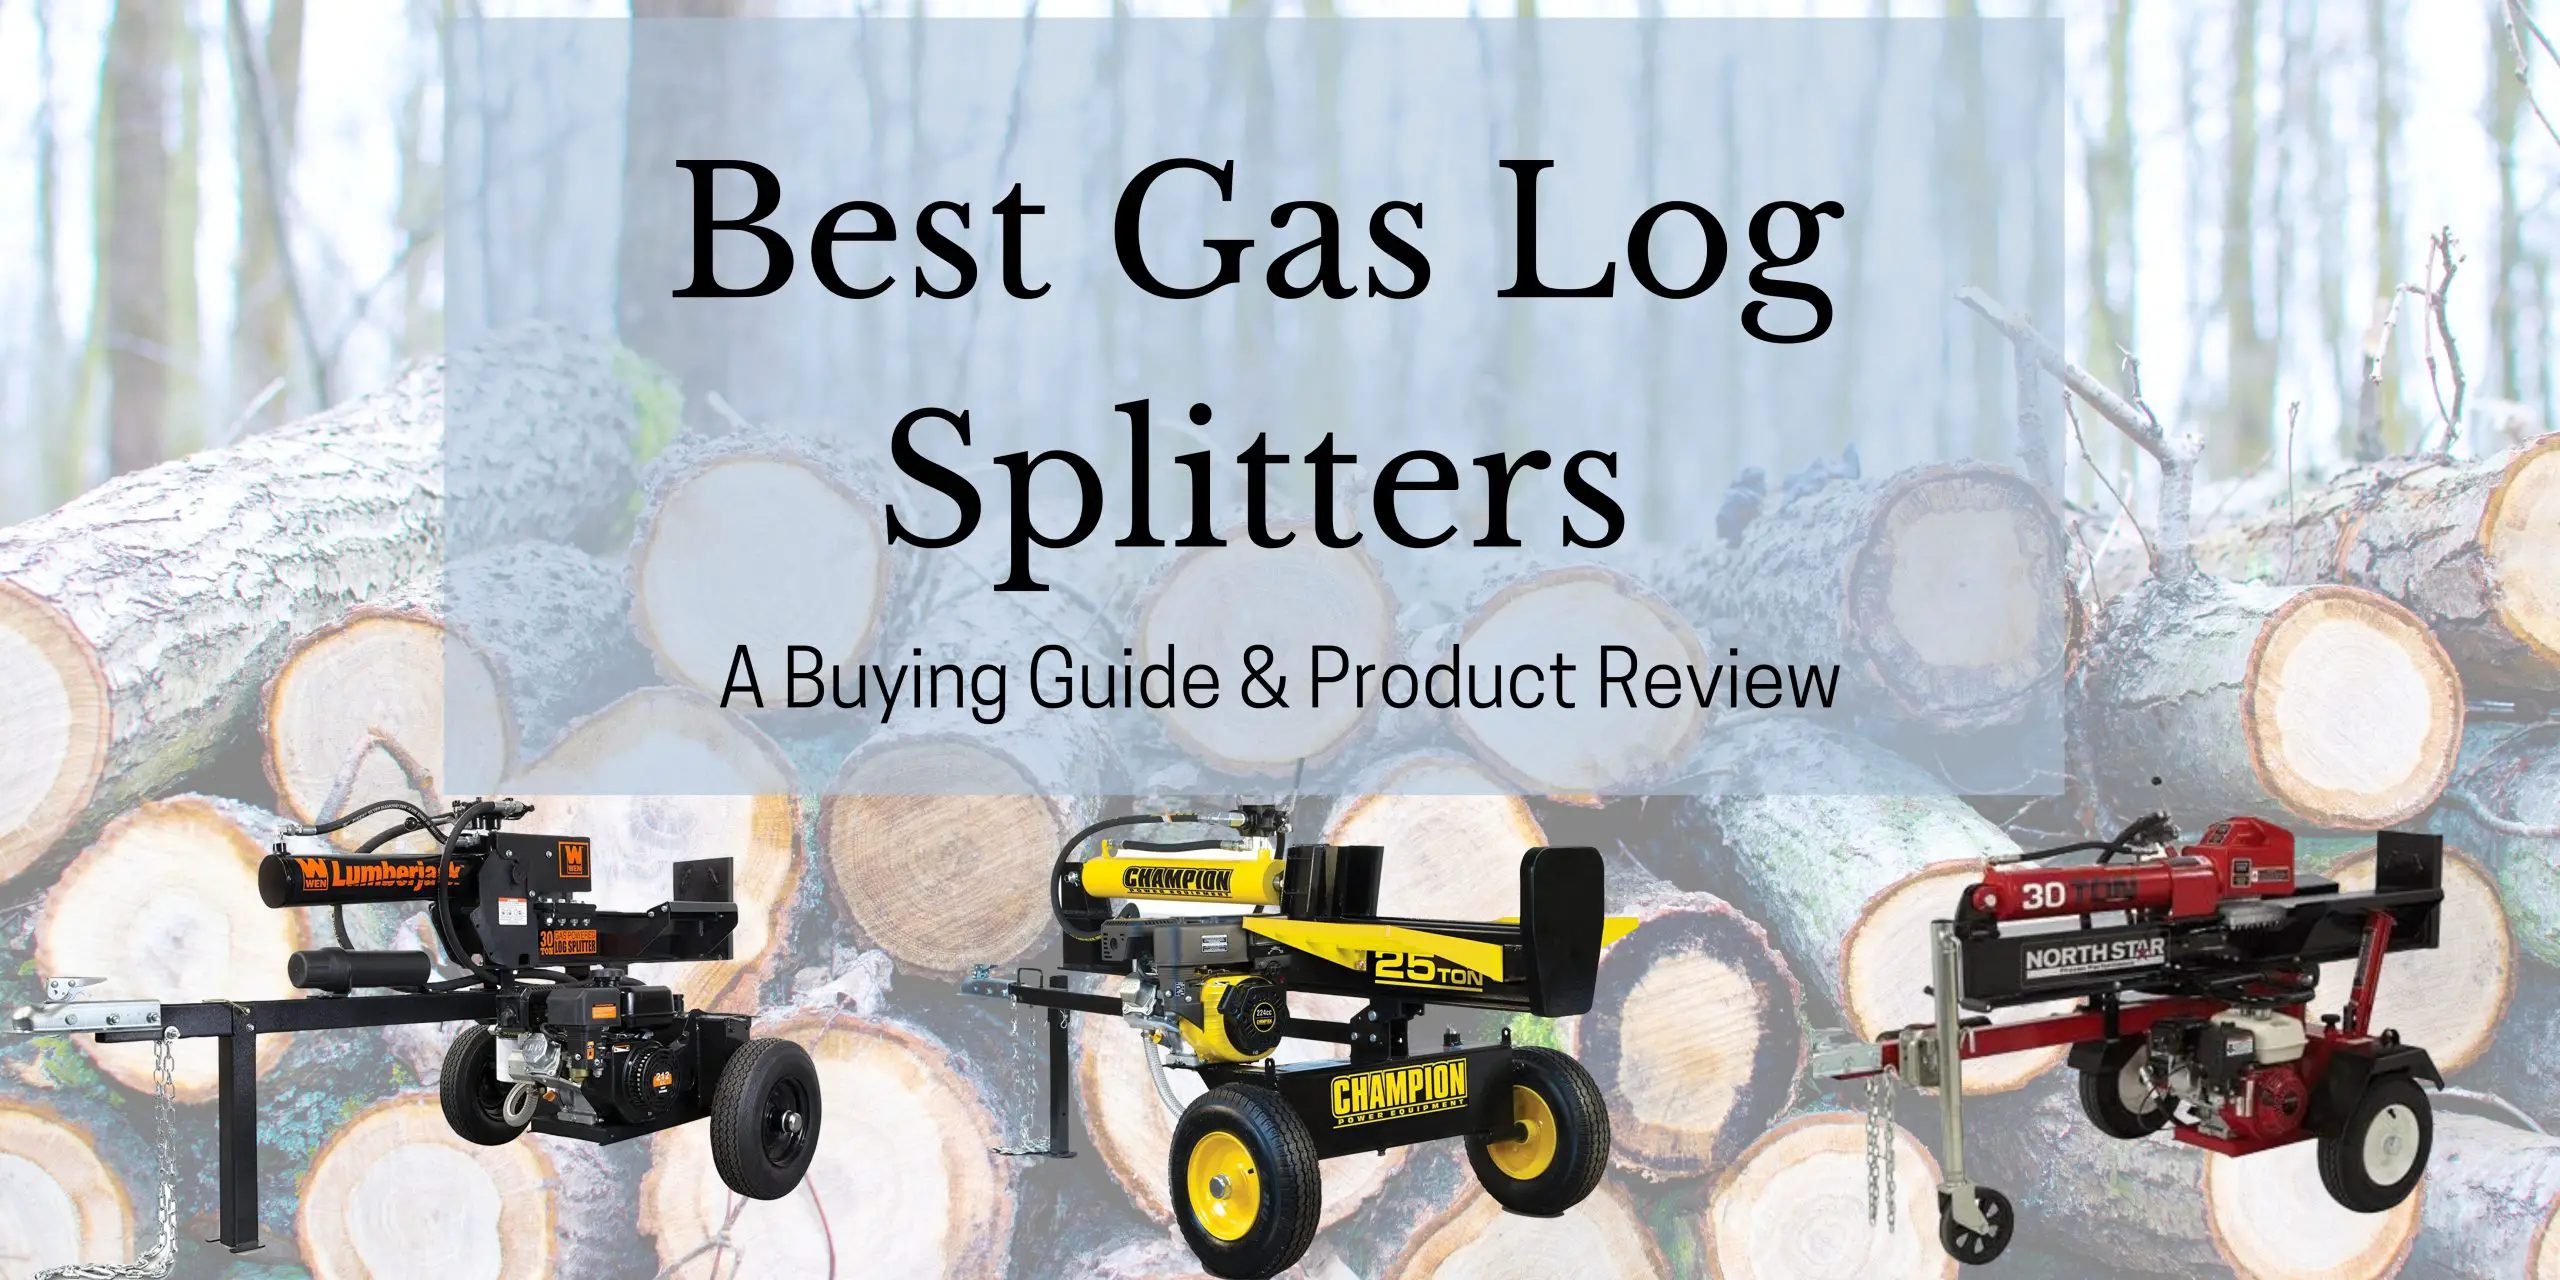 Best Gas Log Spiltters